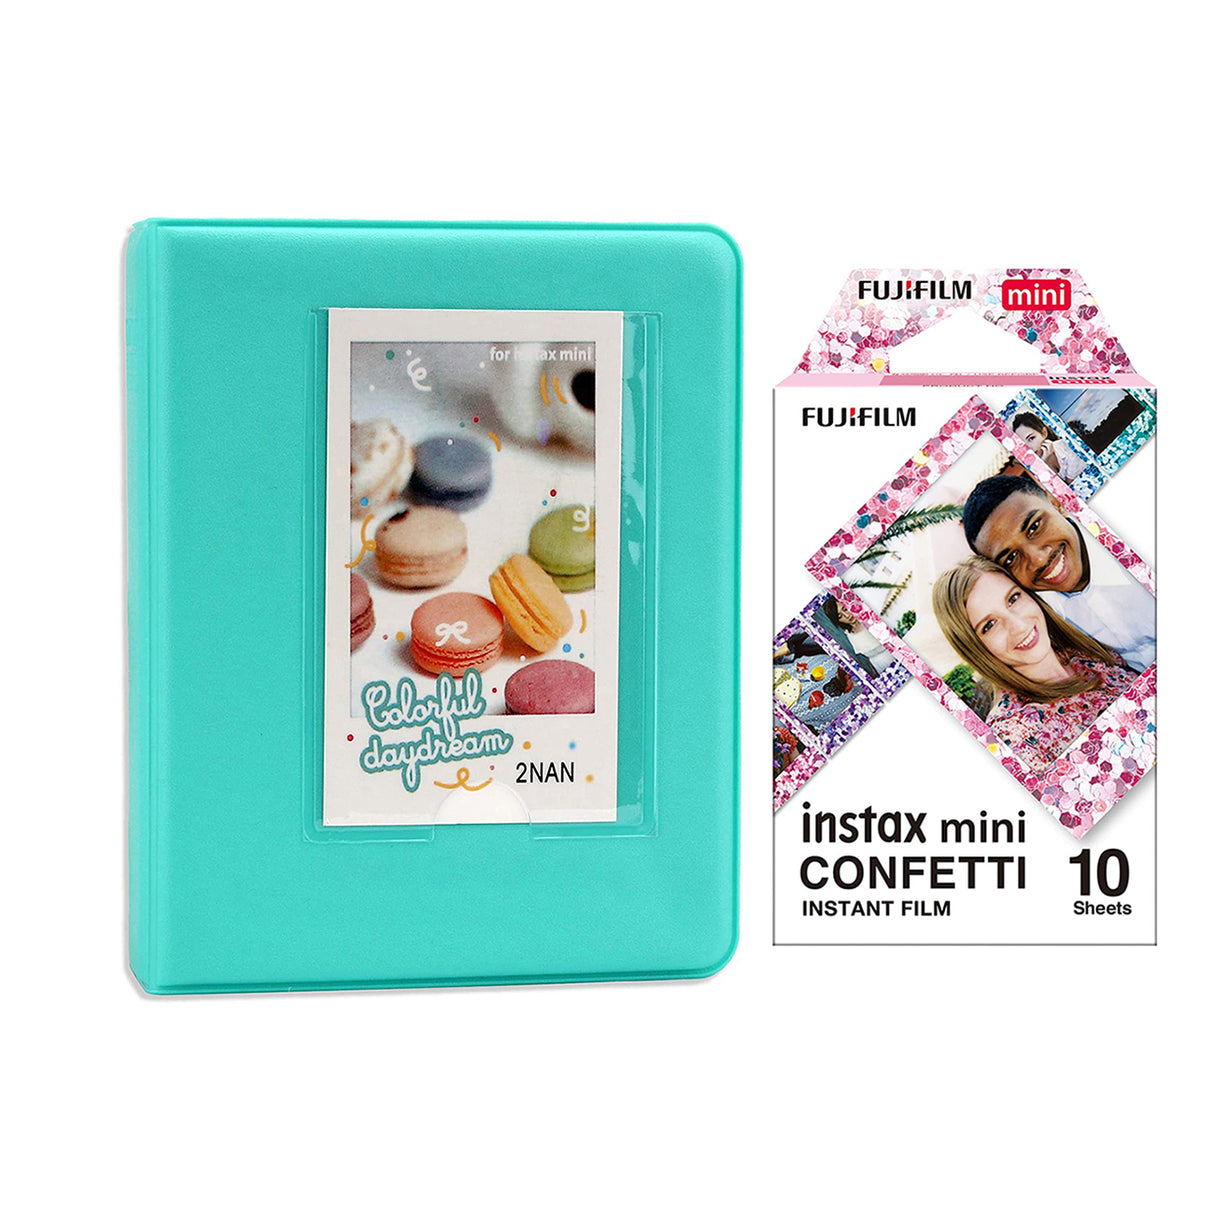 Fujifilm Instax Mini 10X1 confetti Instant Film with Instax Time Photo Album 64 Sheets Mint Green